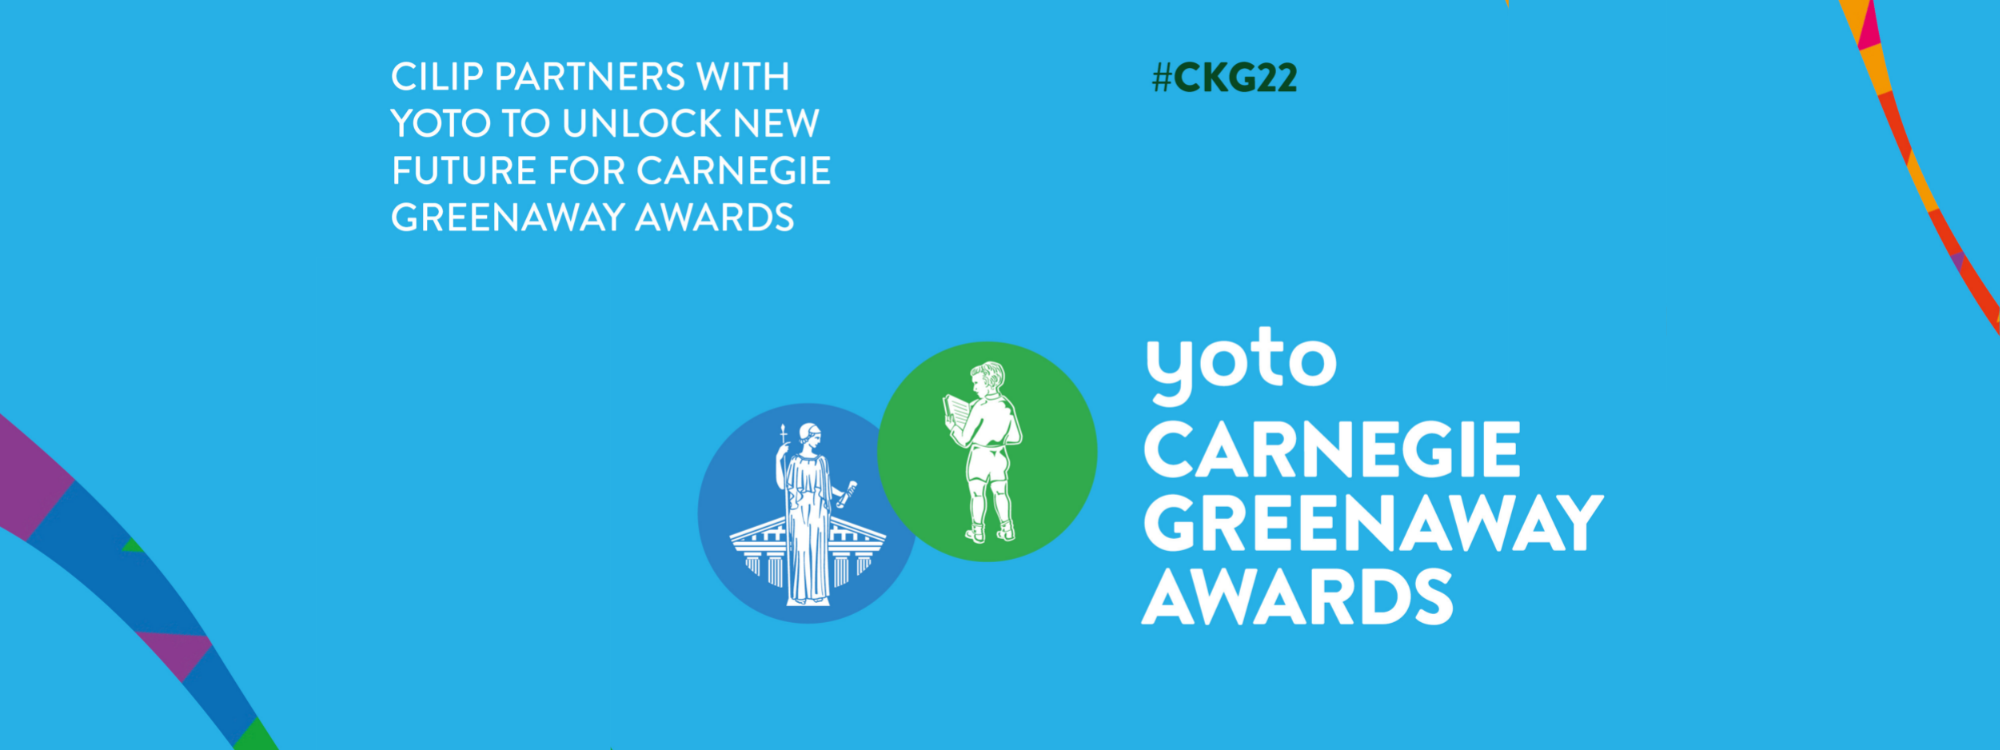 Yoto Carnegie Greenaway Awards